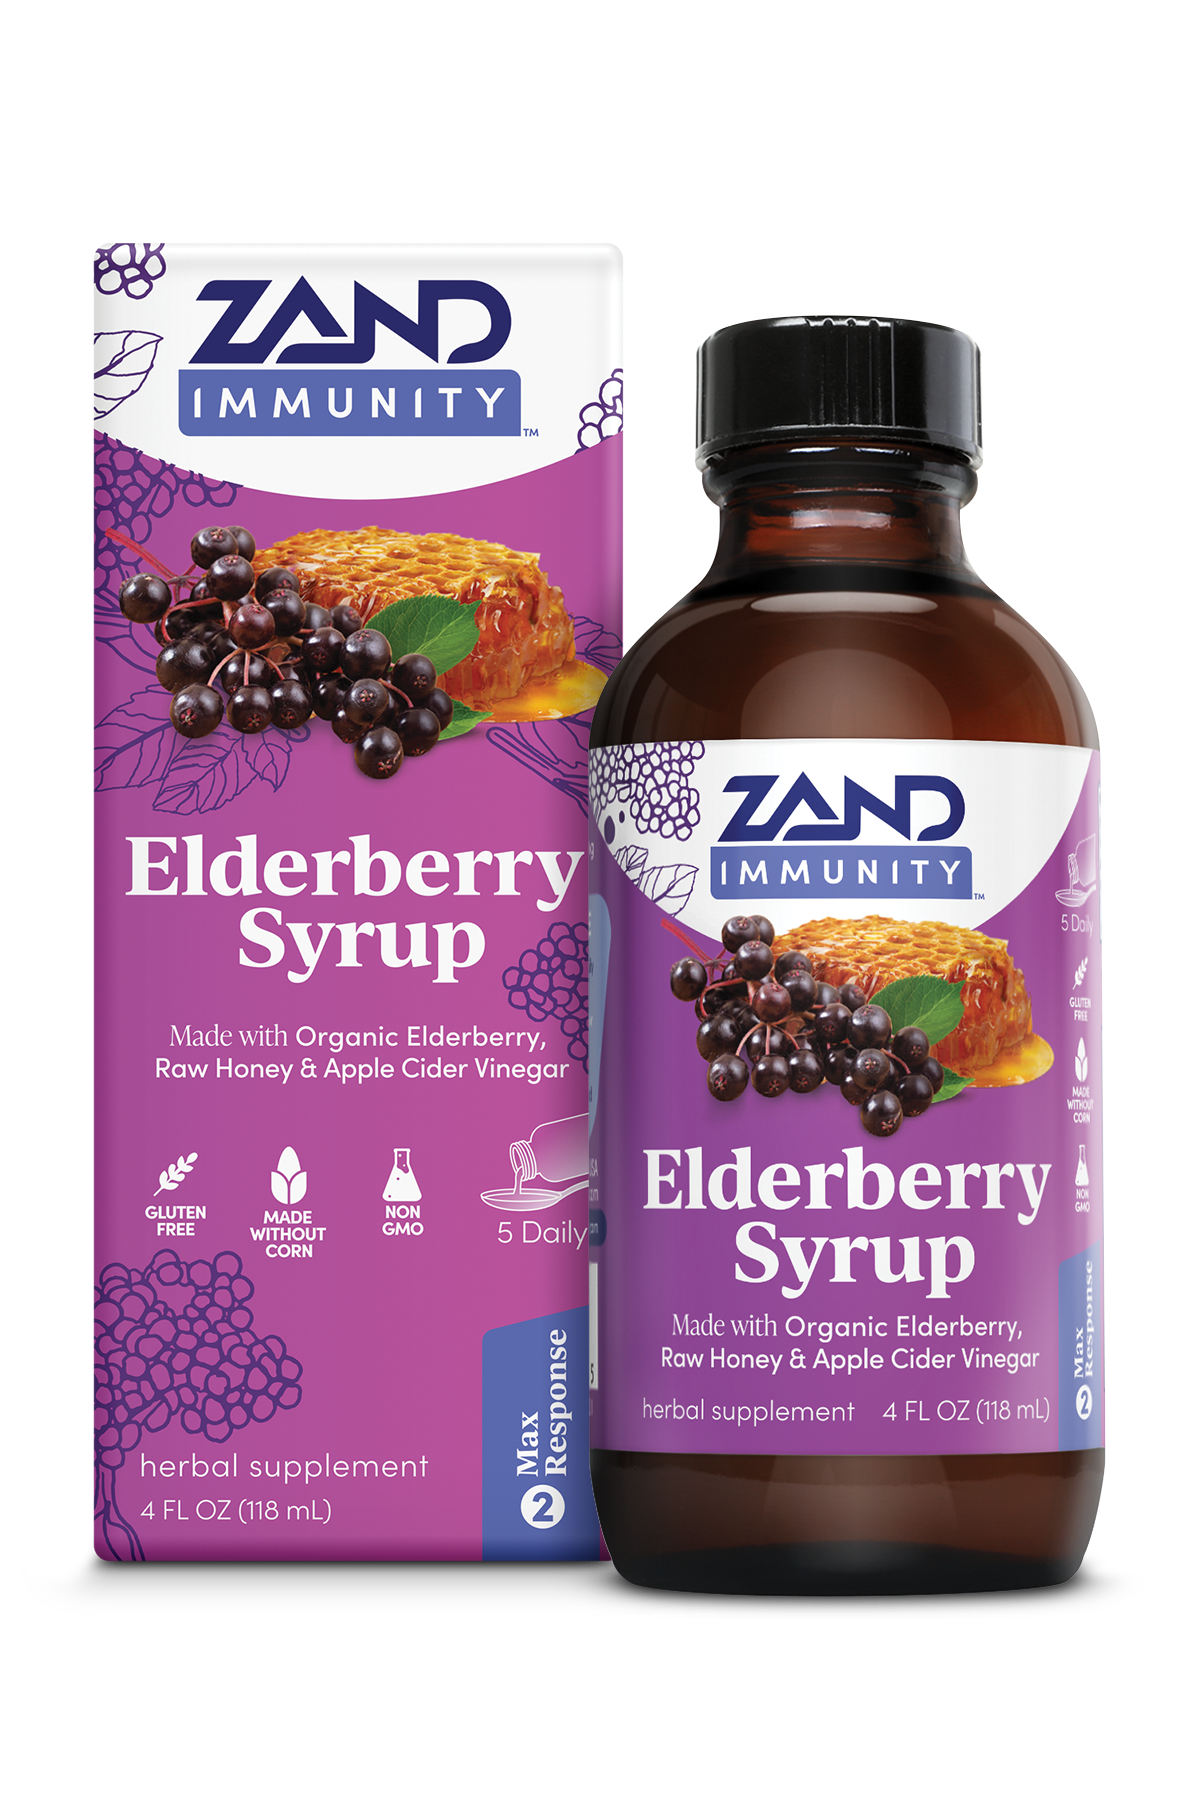 Elderberry Honey Syrup